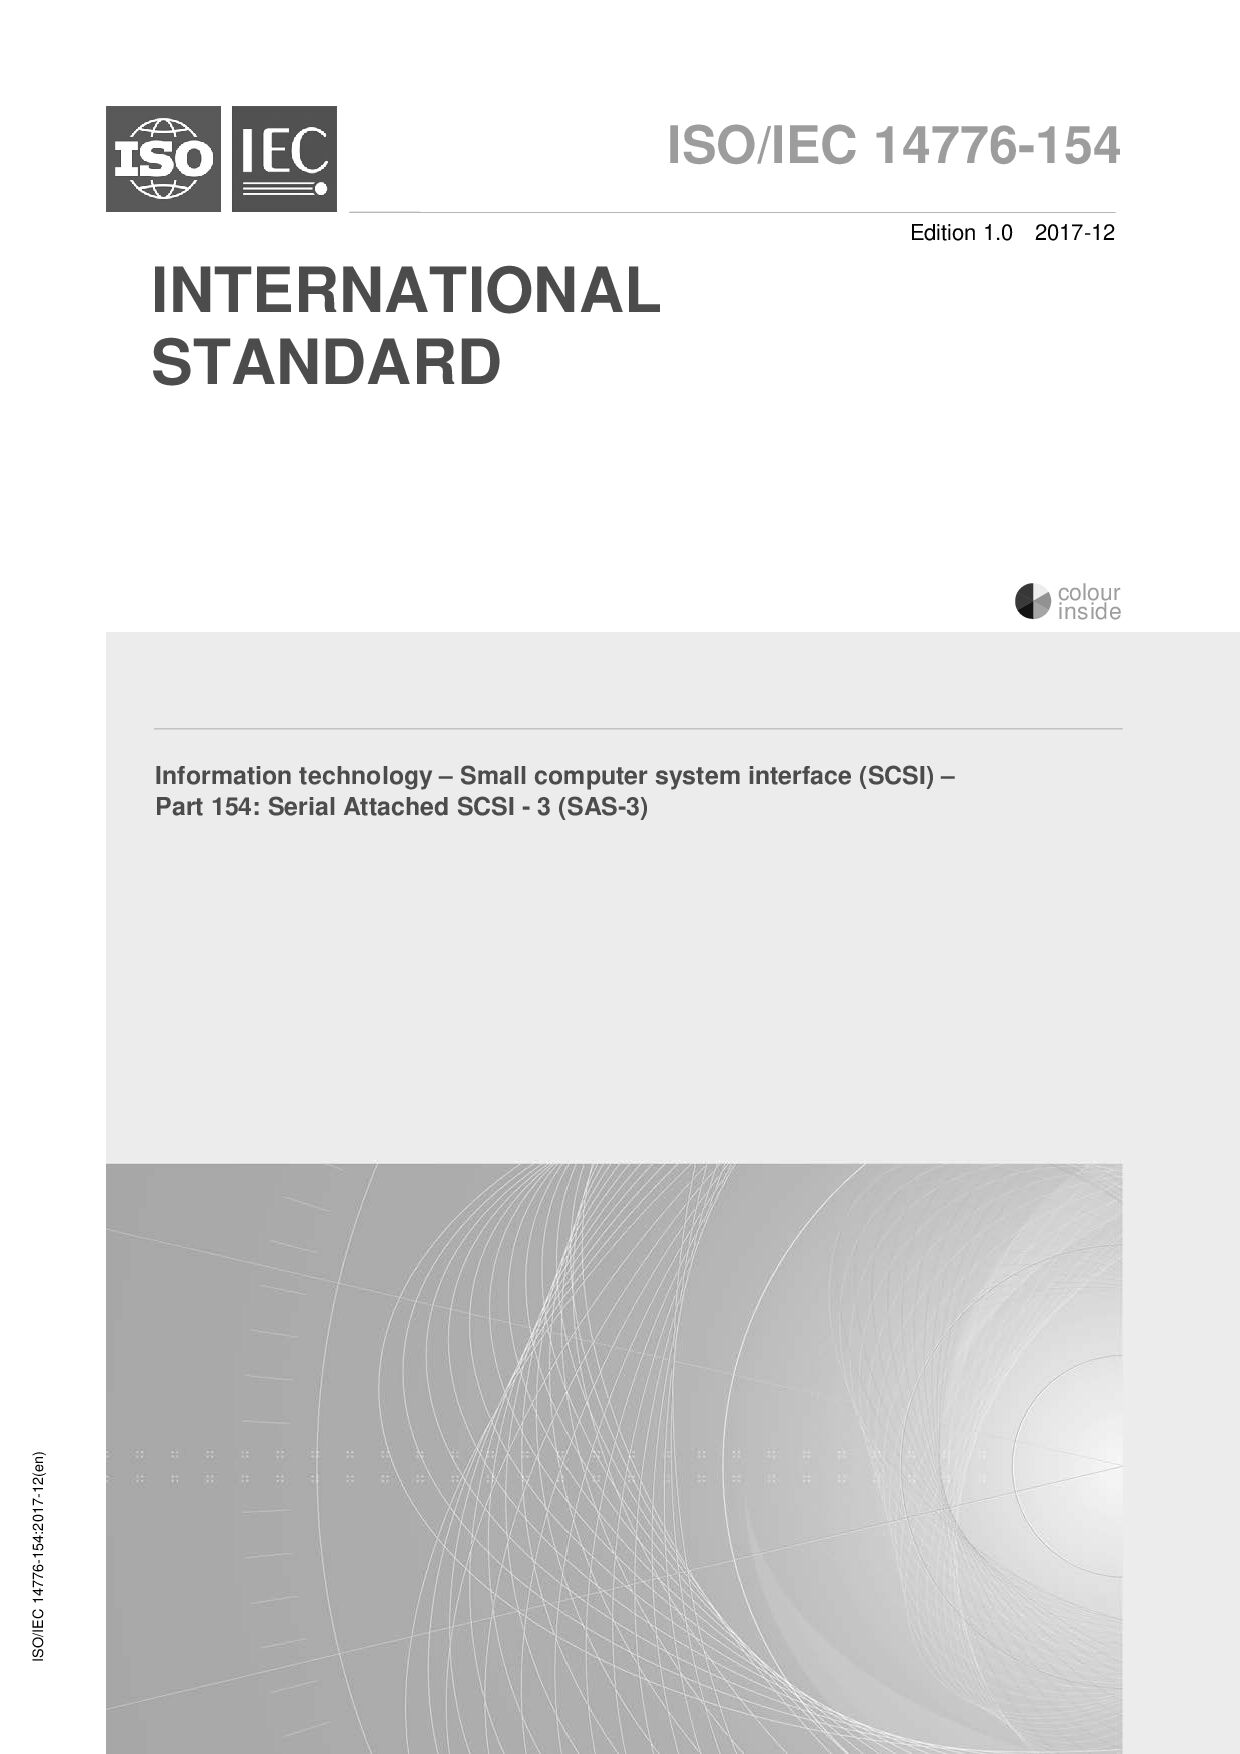 ISO/IEC 14776-154:2017